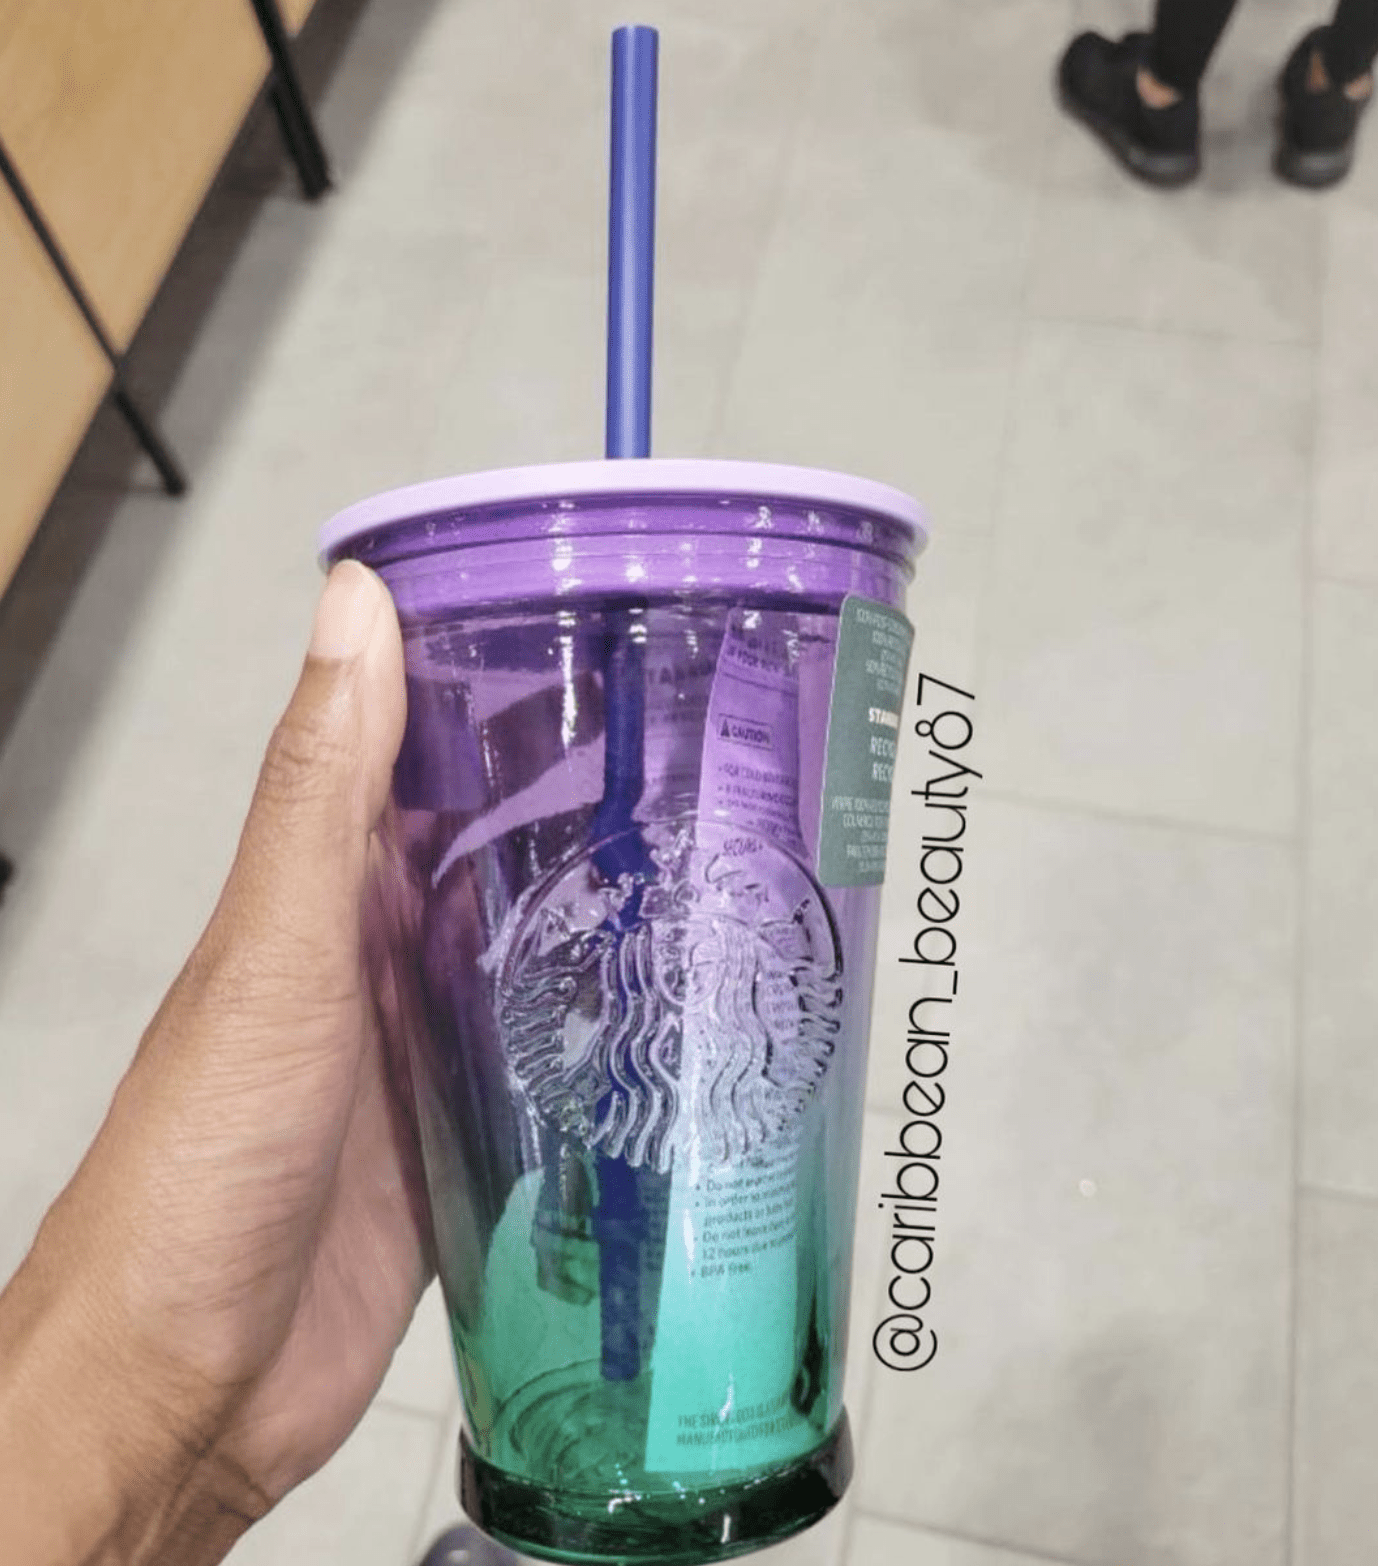 Purple Starbucks Cup: Sip Lavishly from a Regal Purple Starbucks Cup -  Crosslake Coffee